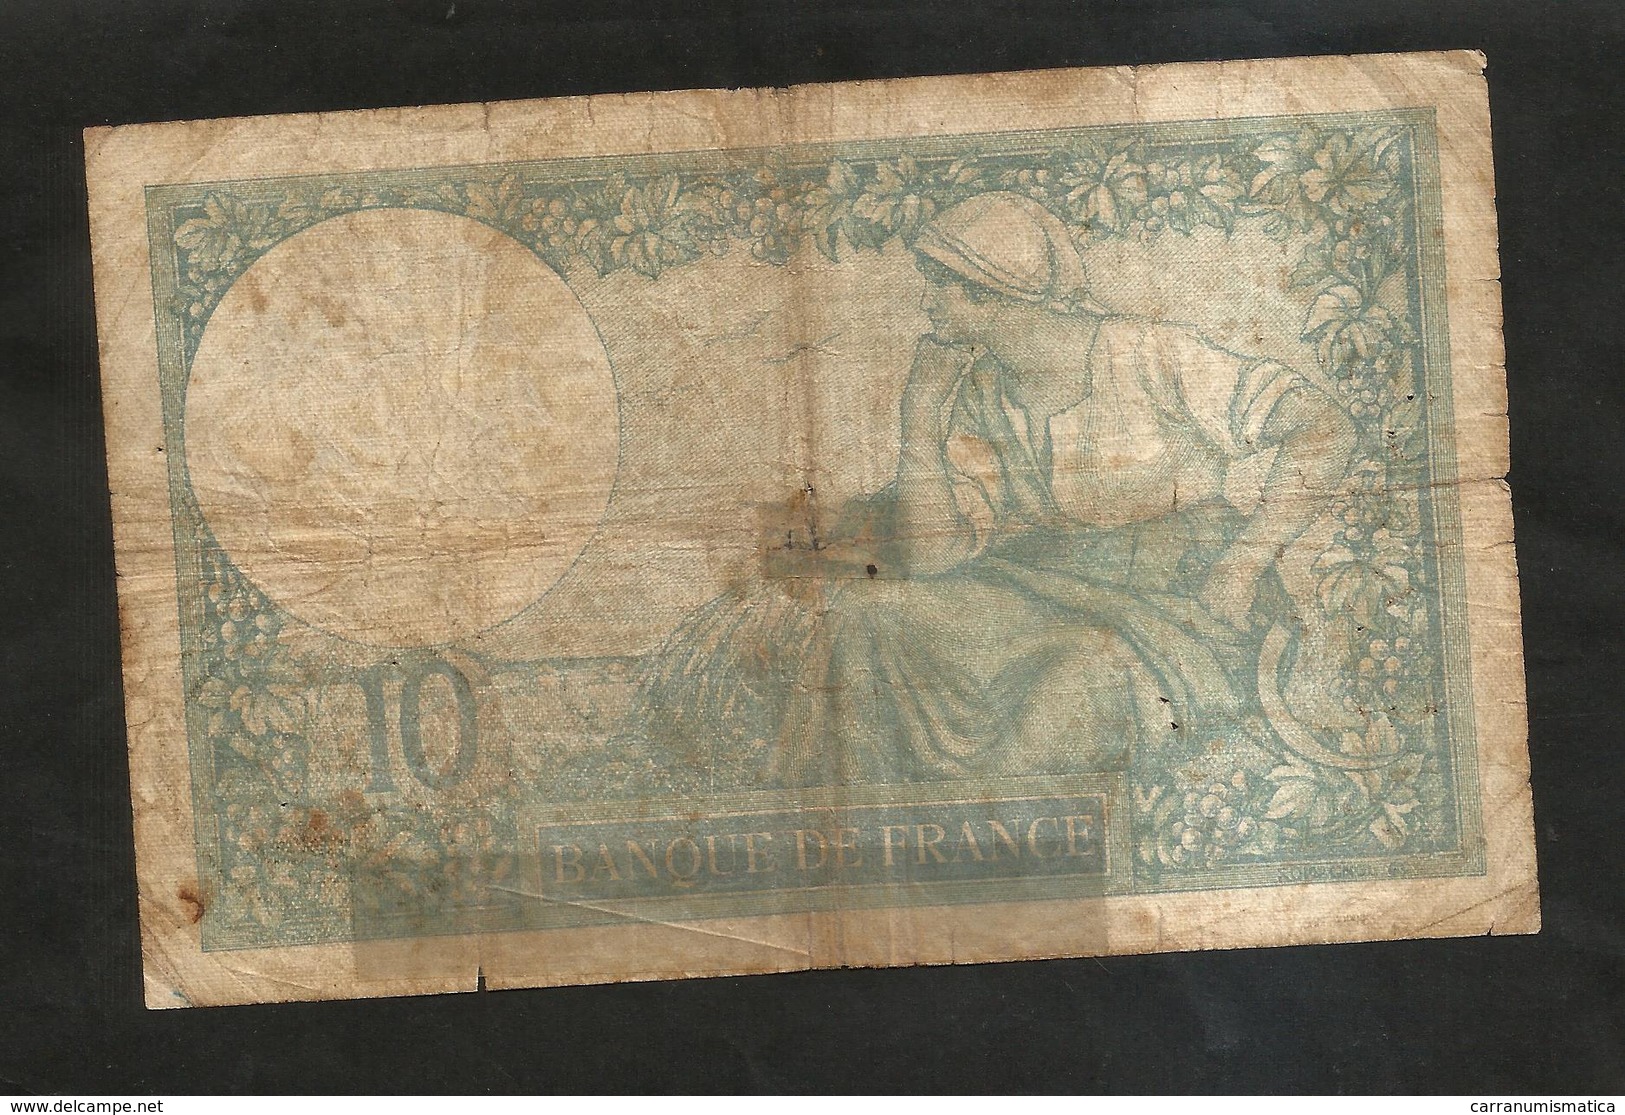 FRANCE - BANQUE De FRANCE - 10 Francs MINERVE (FM. 9 - 6 - 1932) - 10 F 1916-1942 ''Minerve''